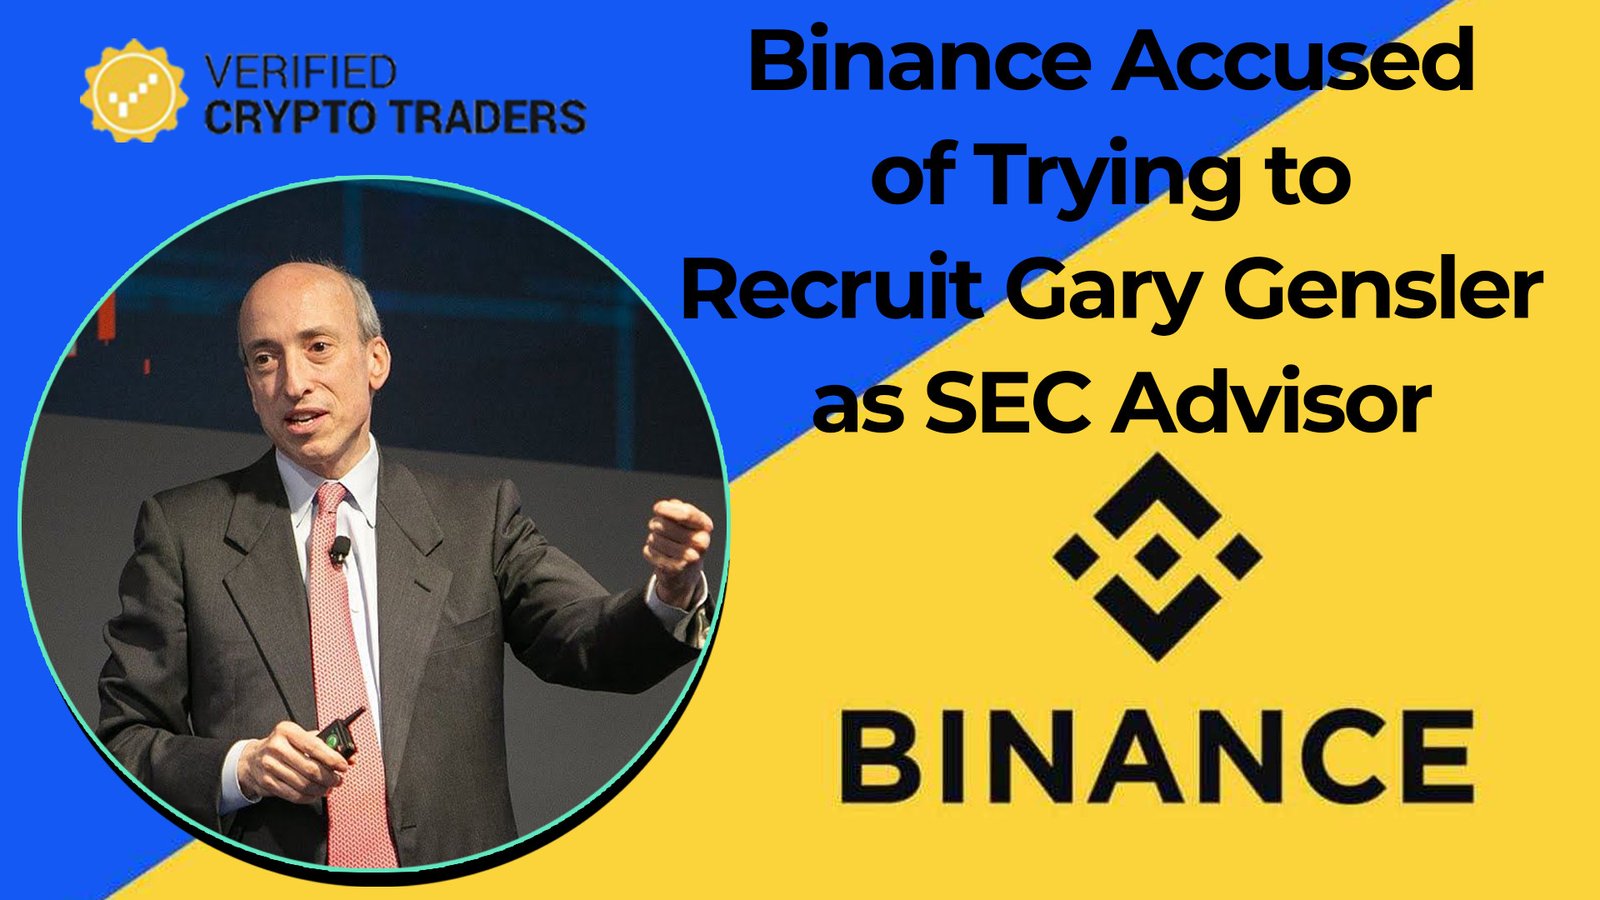 Binance Accused of Trying to Recruit Gary Gensler as SEC Advisor